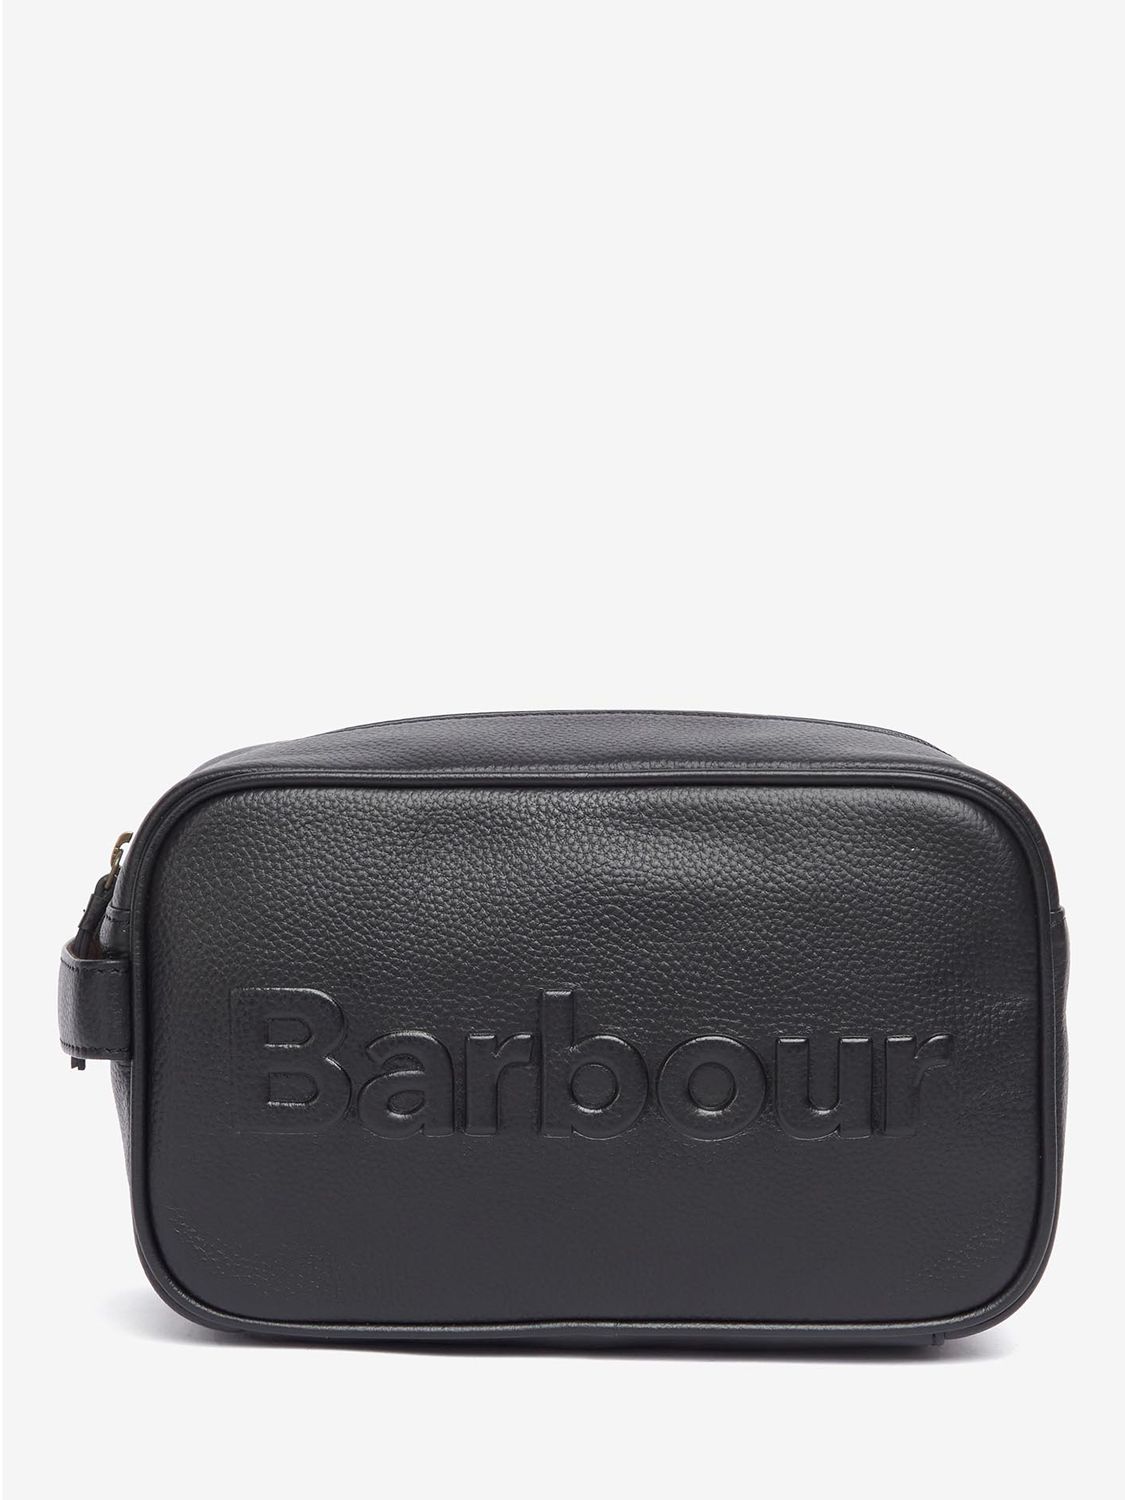 Barbour Debossed Logo Wash Bag, Black